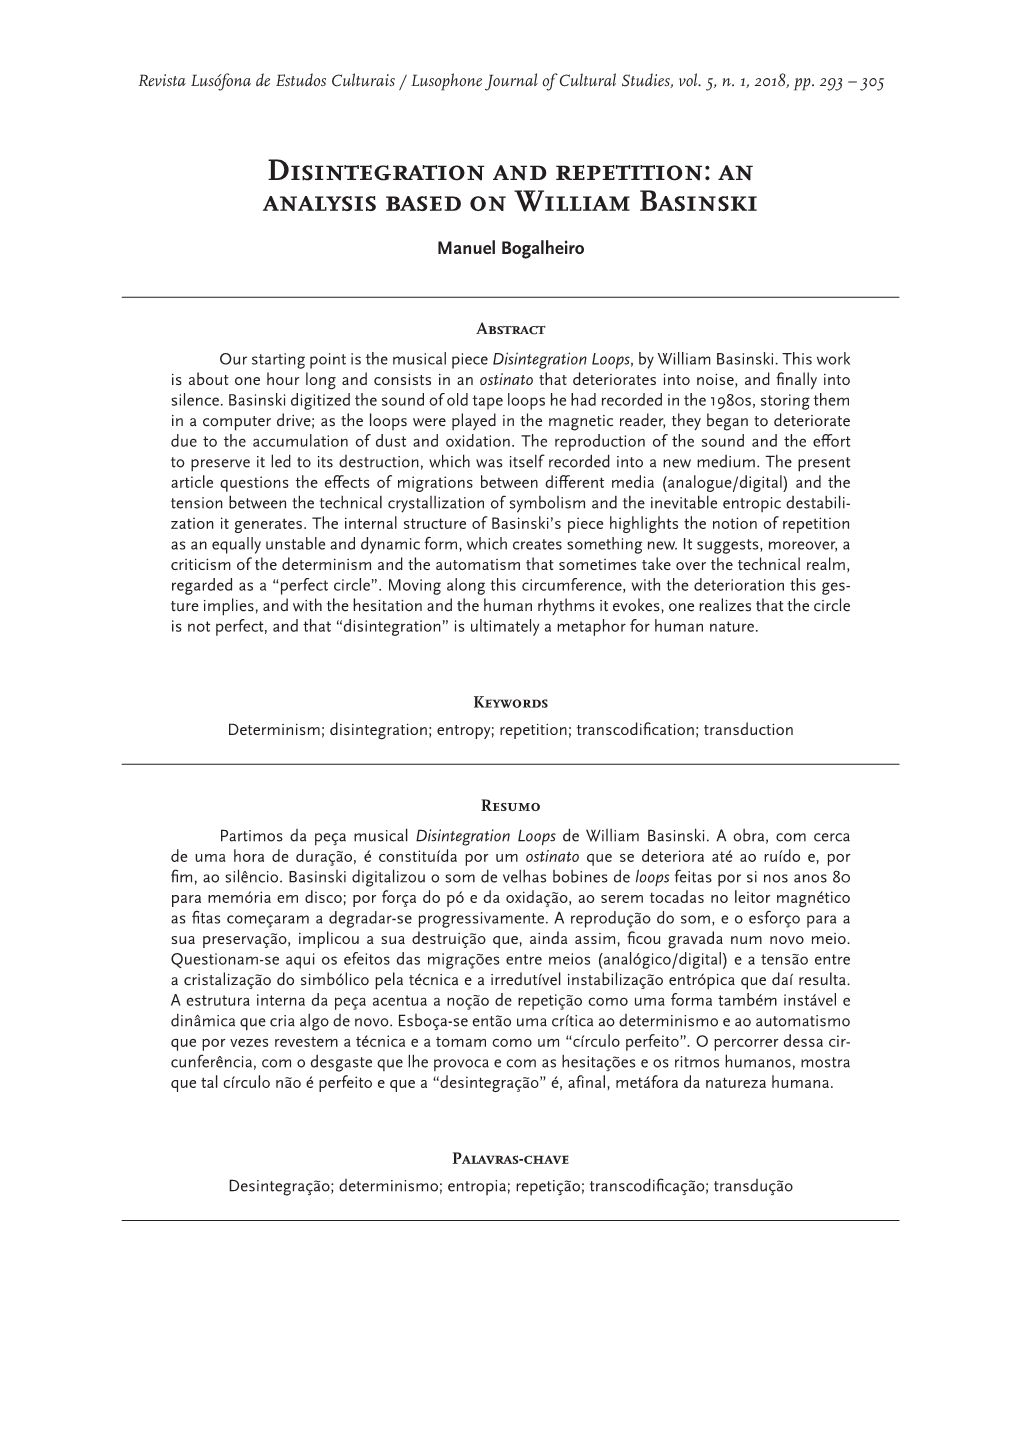 Disintegration and Repetition: an Analysis Based on William Basinski